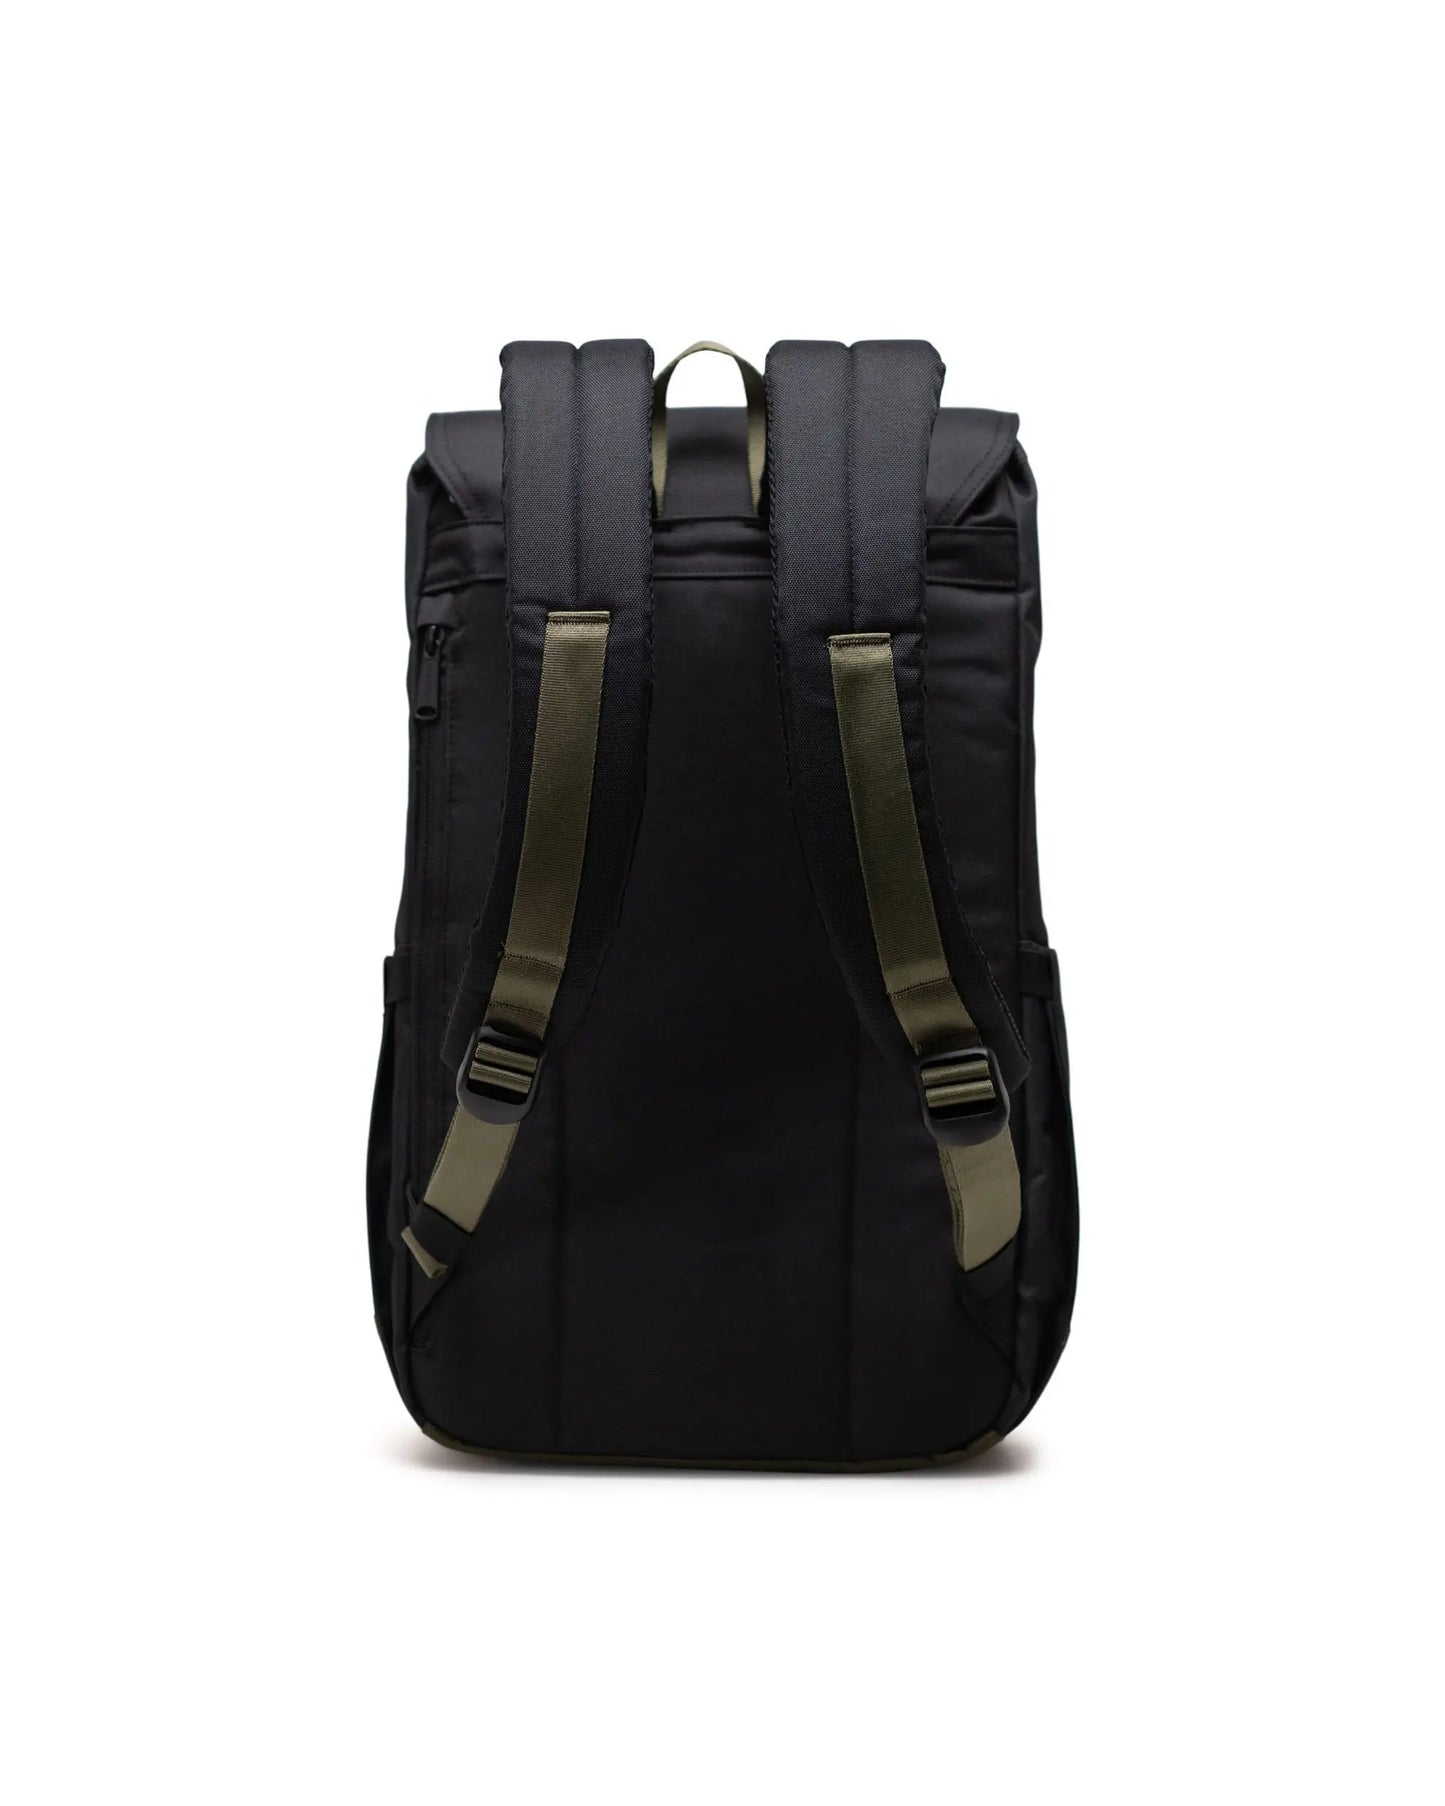 Herschel Retreat Backpack - Black/Ivy Green/Chutney